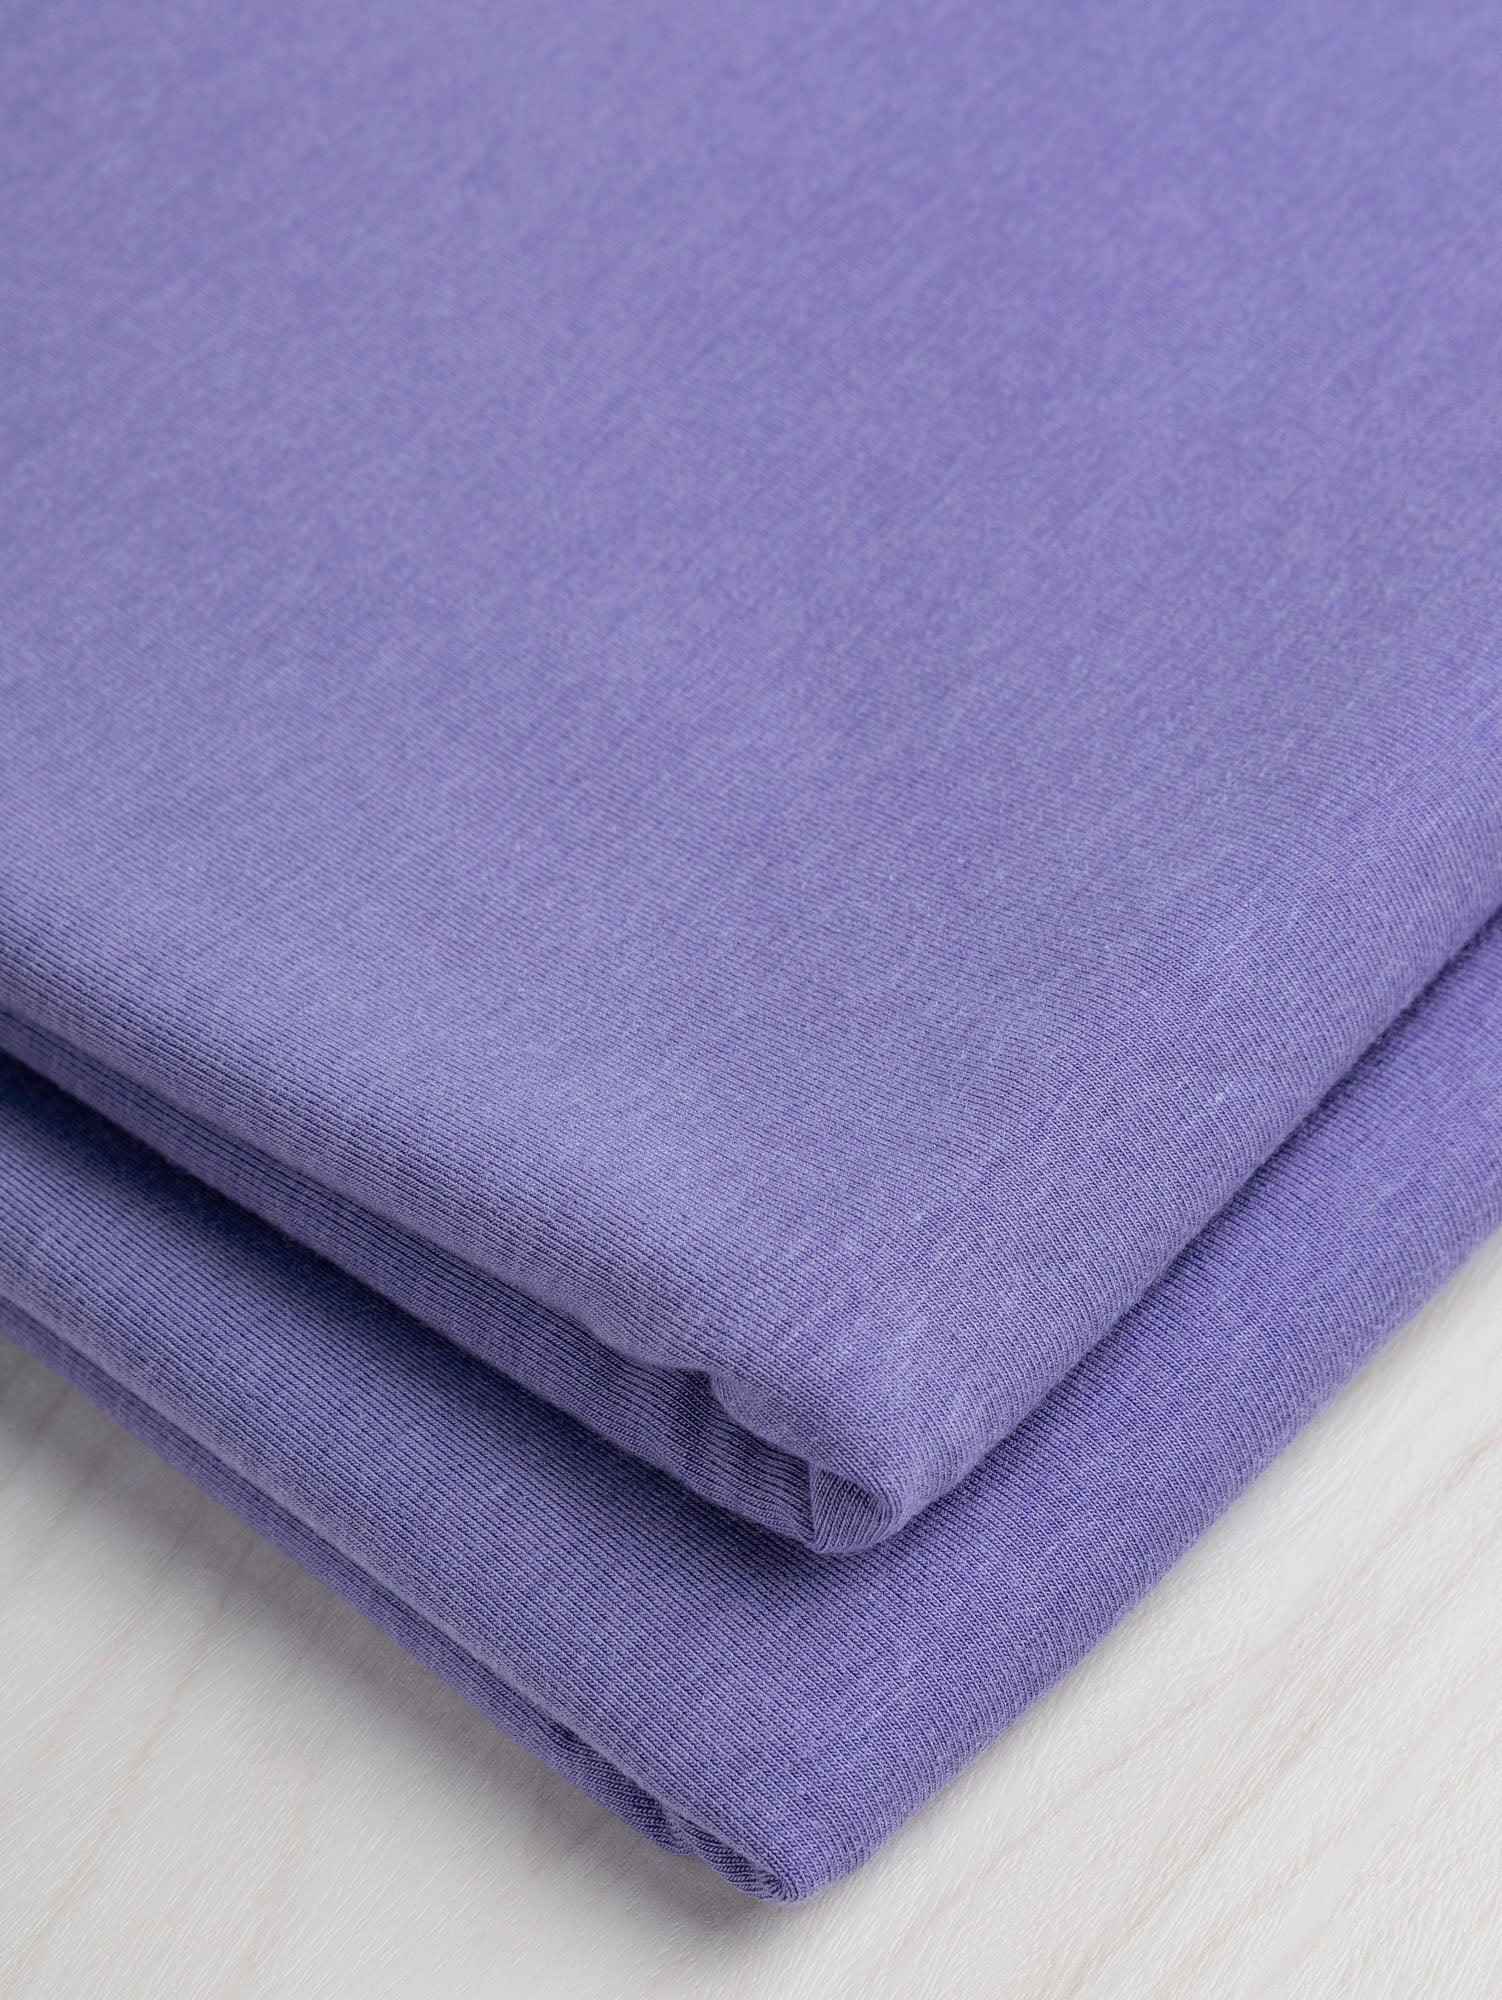 Organic Cotton + Tencel Stretch Knit Jersey - Lavender | Core Fabrics